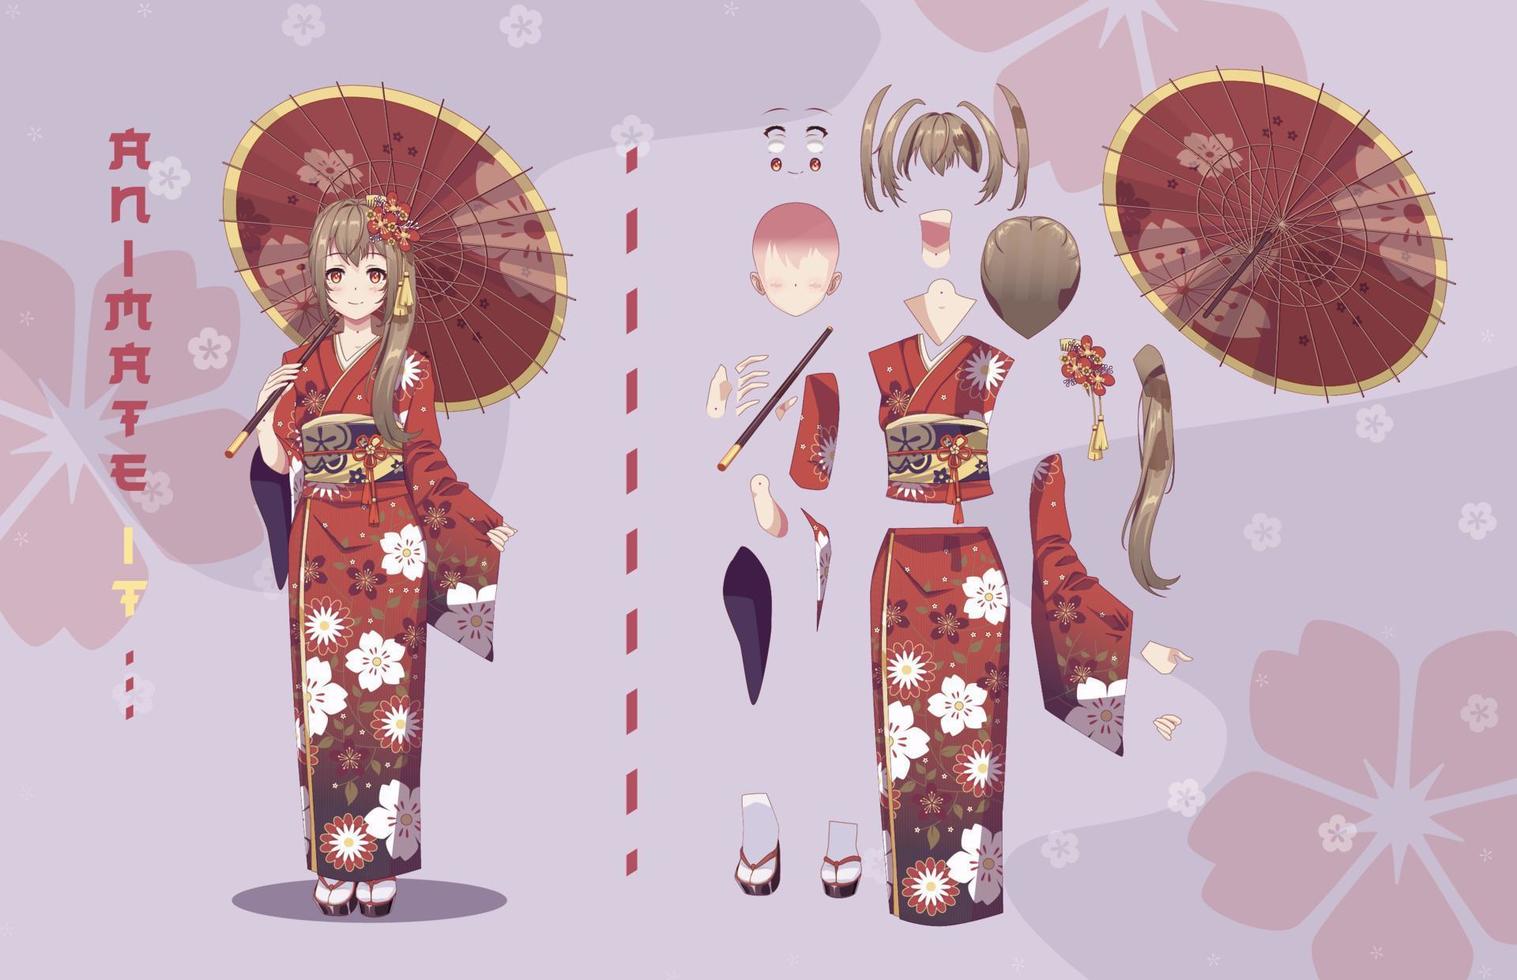 personajes de dibujos animados de anime manga girl para animación, kit de diseño de movimiento. partes del cuerpo. niña o geisha con kimono japonés de pie con paraguas vector